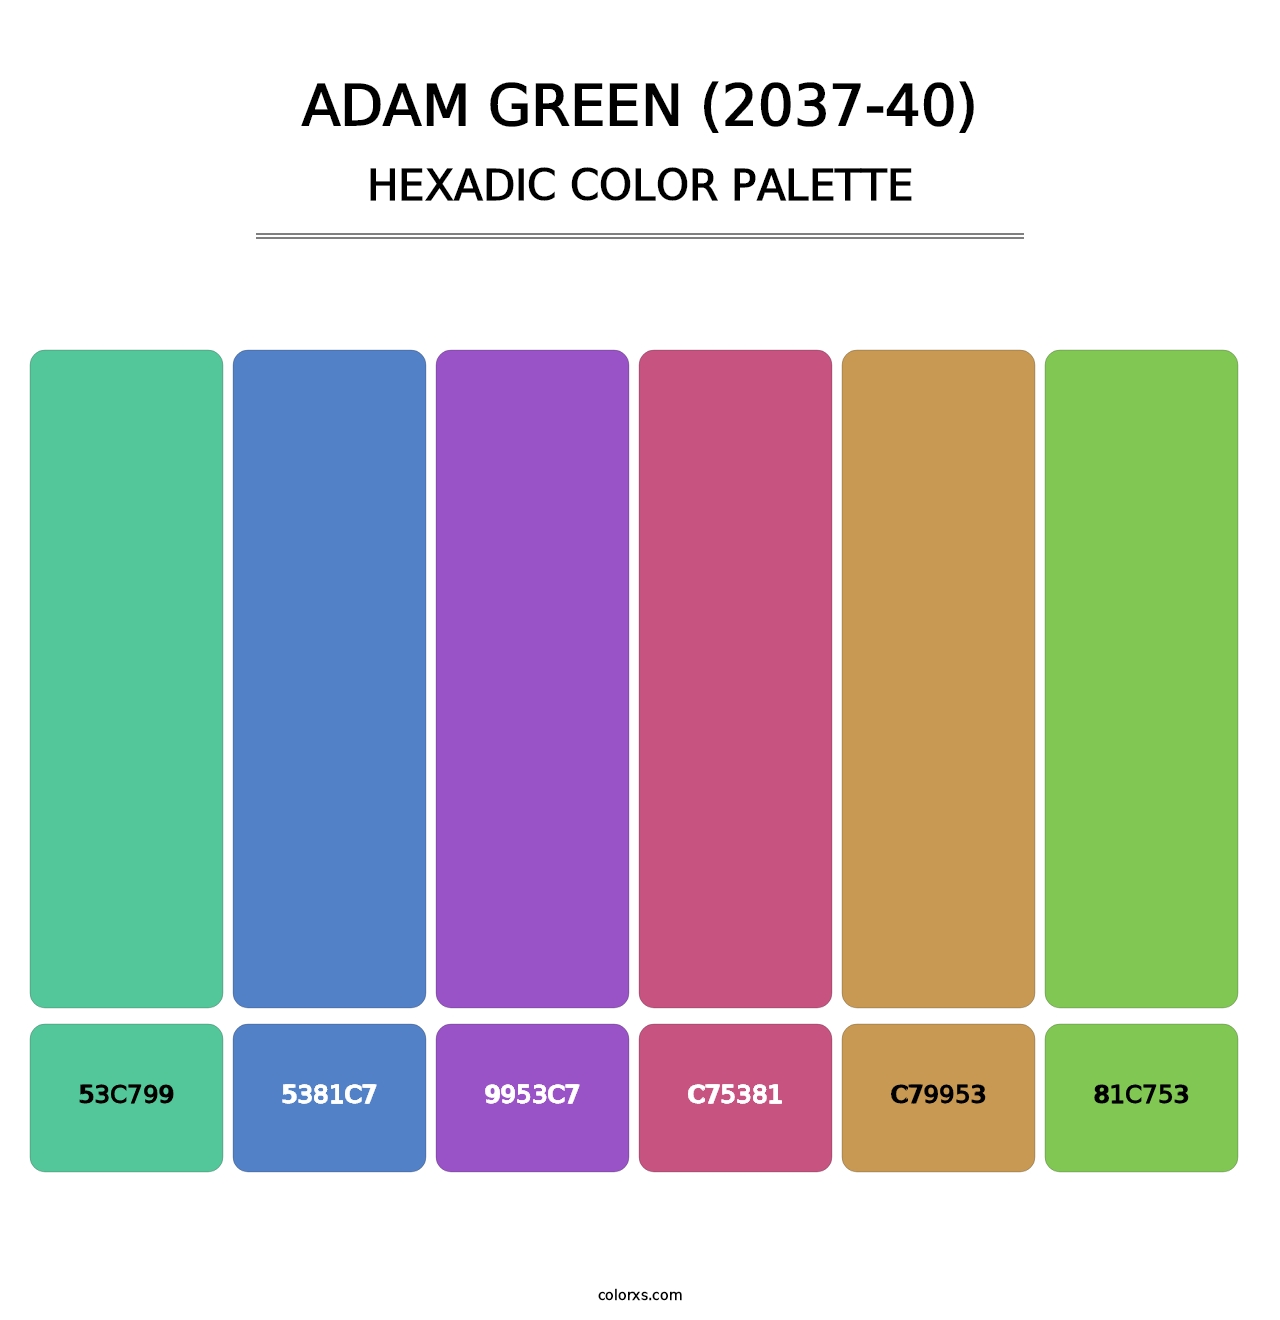 Adam Green (2037-40) - Hexadic Color Palette